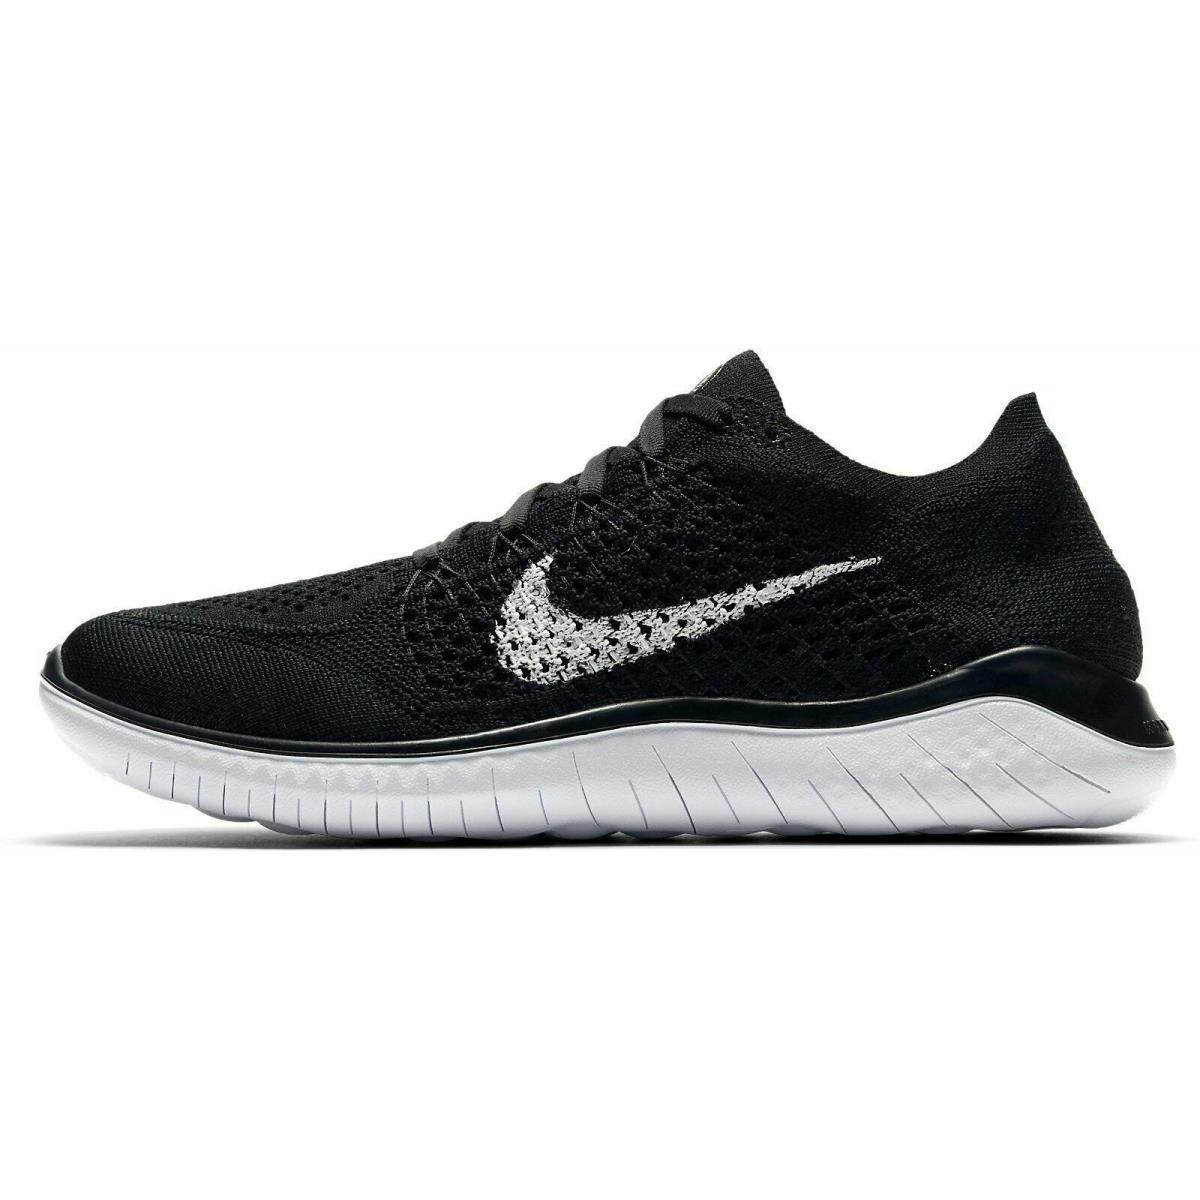 Wmns Nike Free RN Flyknit 2018 Running Shoes Blk/wht 942839-001 US Sz 7.5-11.5 - Black / White